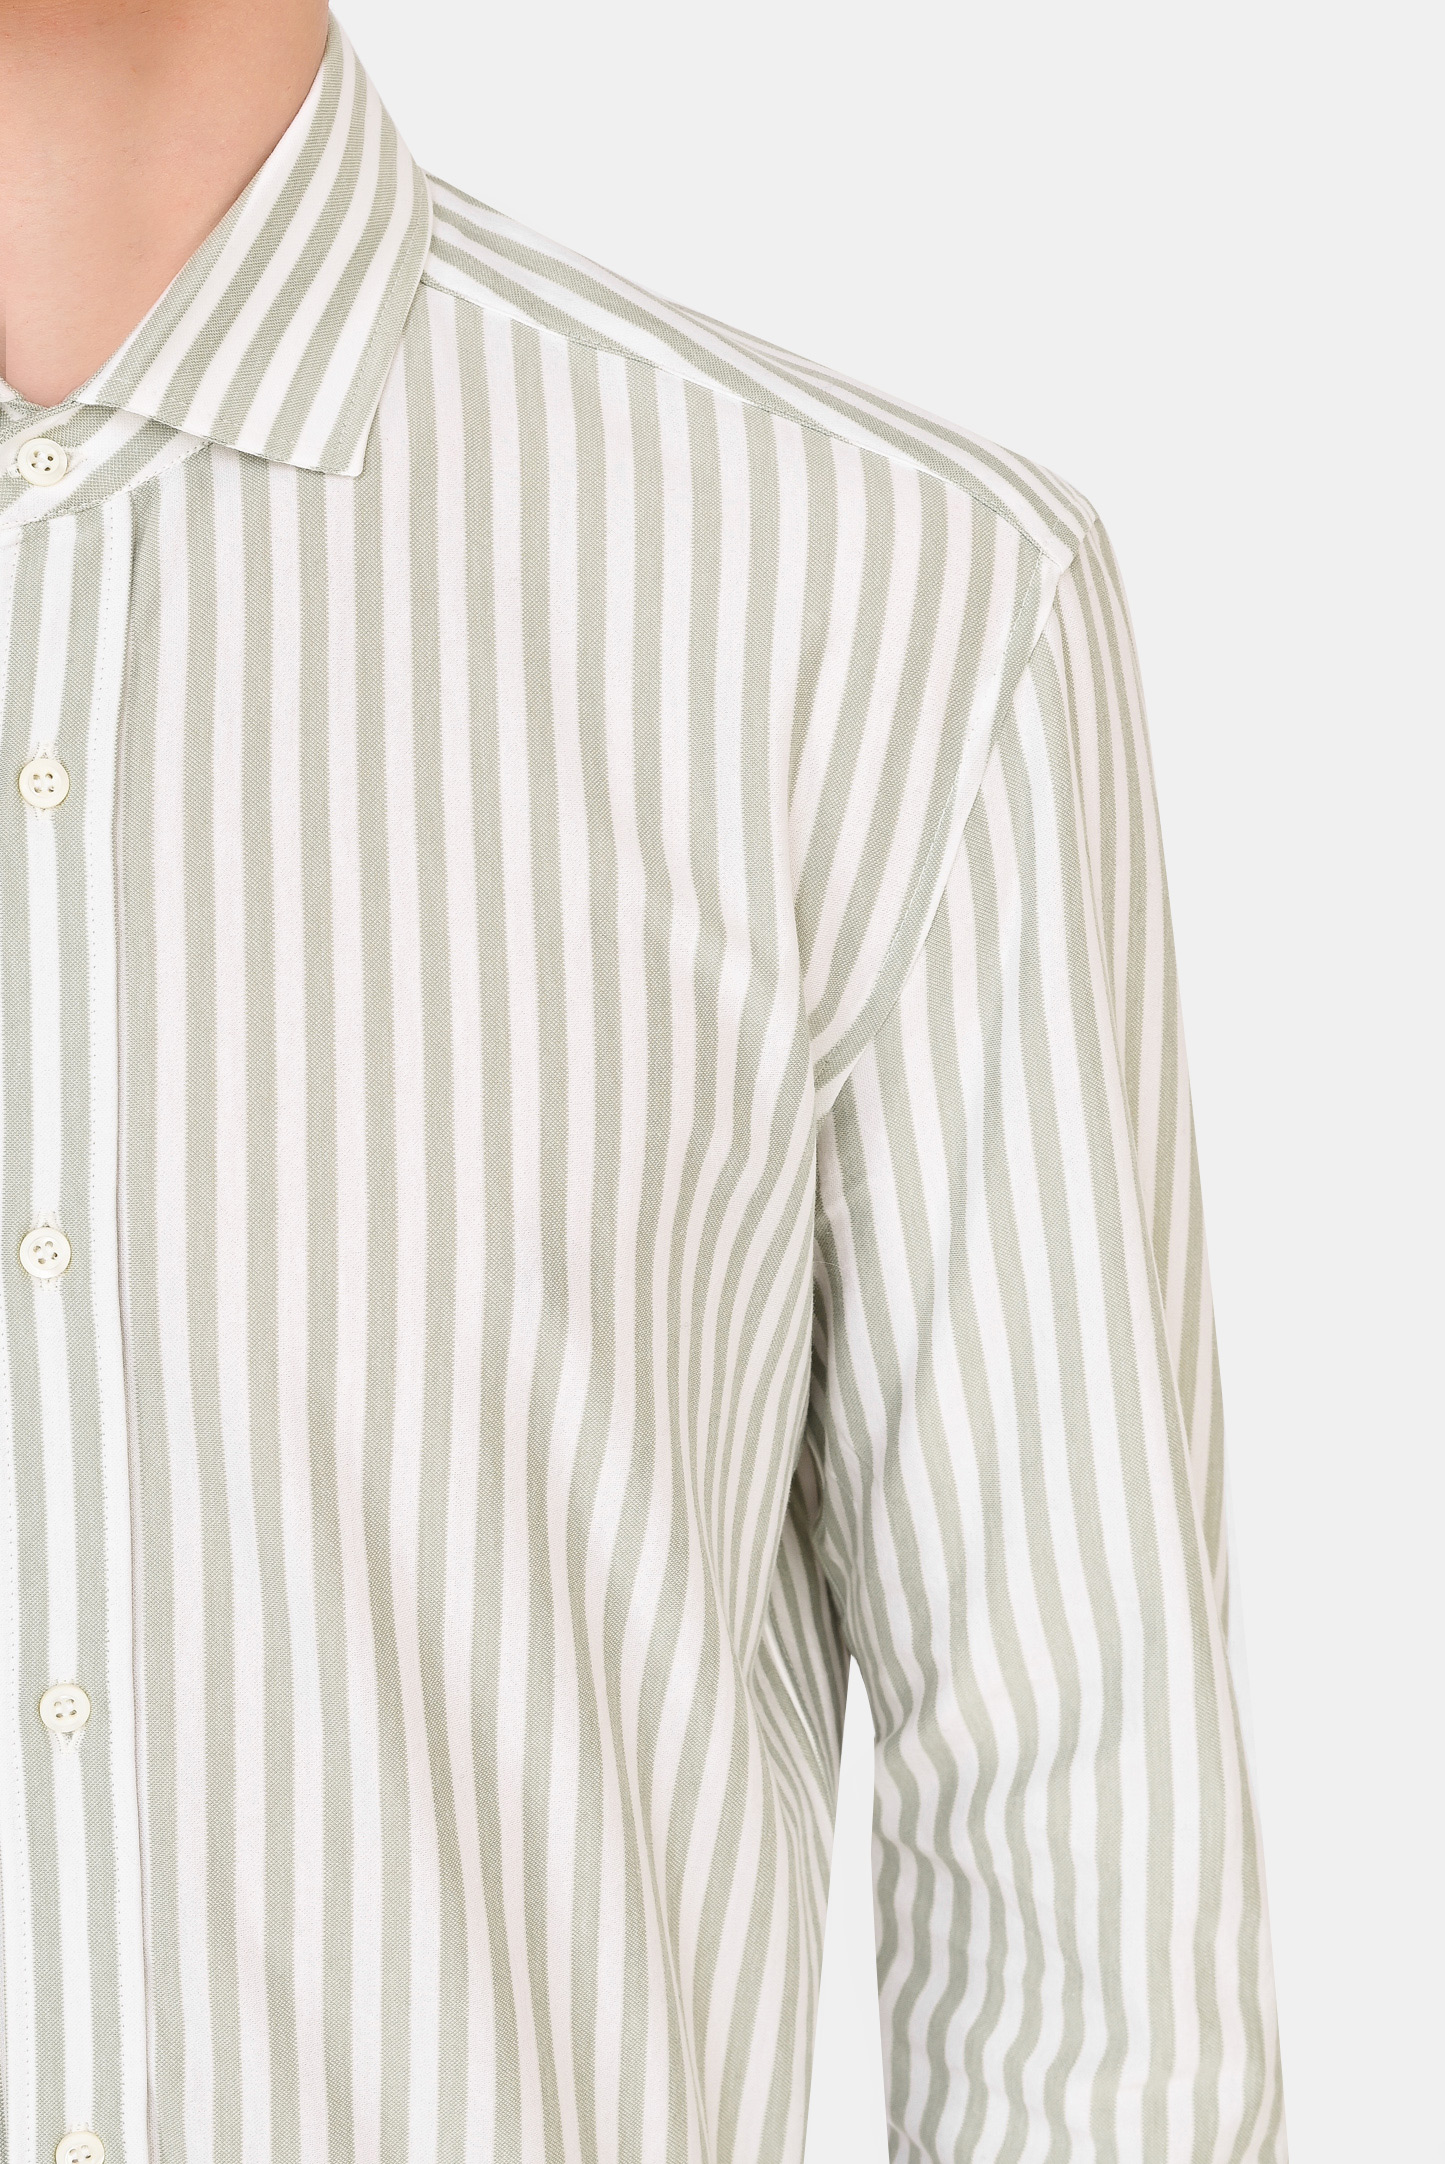 Рубашка BRUNELLO  CUCINELLI MTS736699, цвет: Белый, Мужской